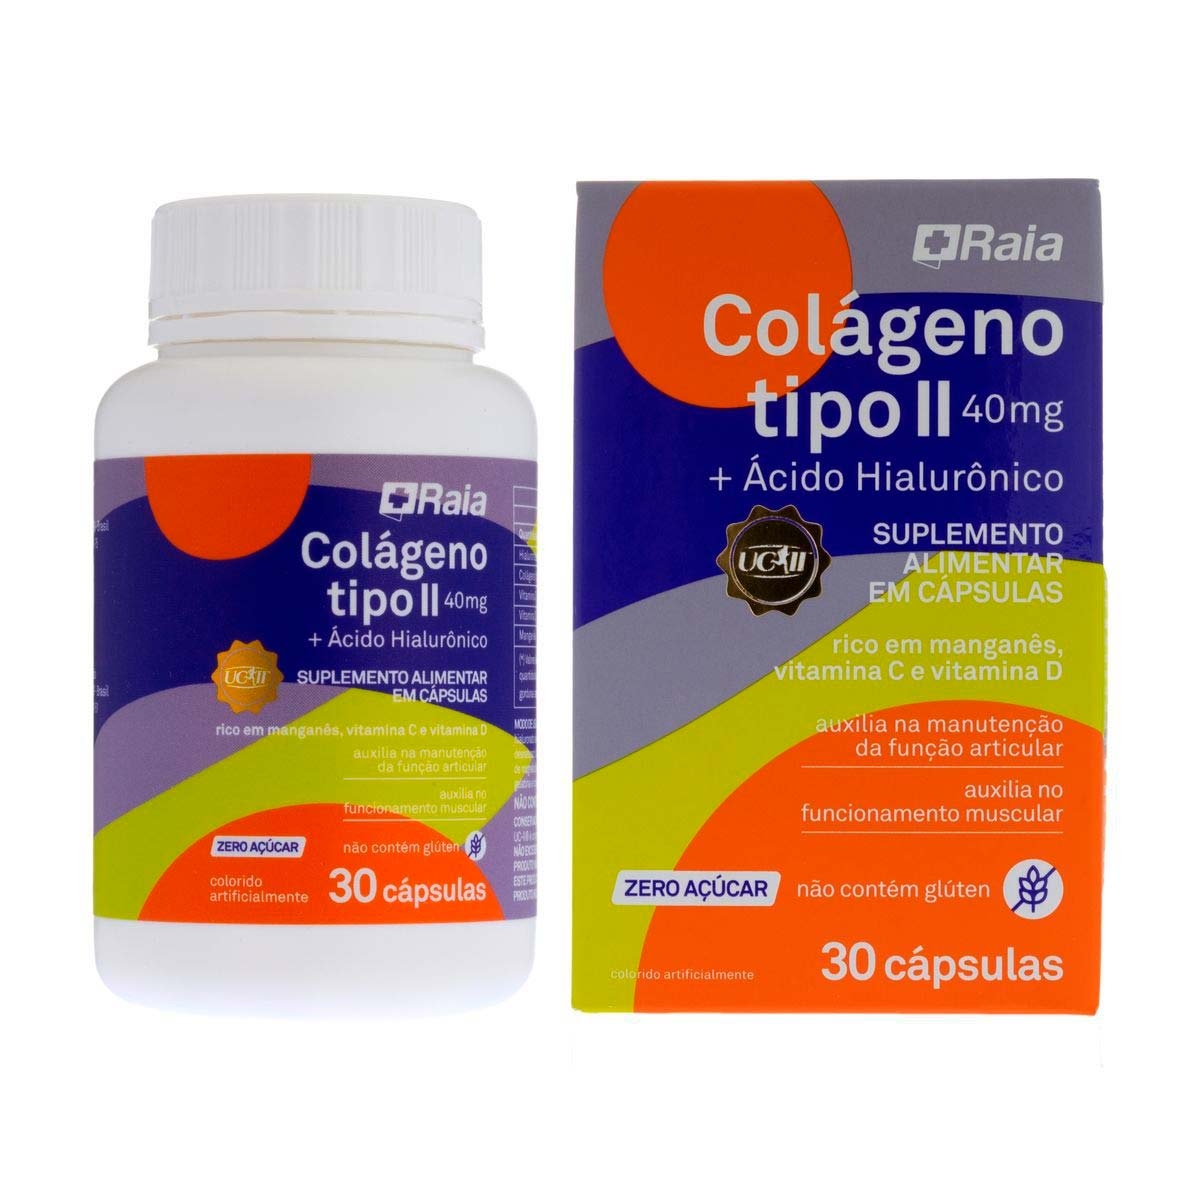 Carti master suplemento alimentar de colágeno tipo ii e ác. hialurônico  c/60 cps oferta na Drogal